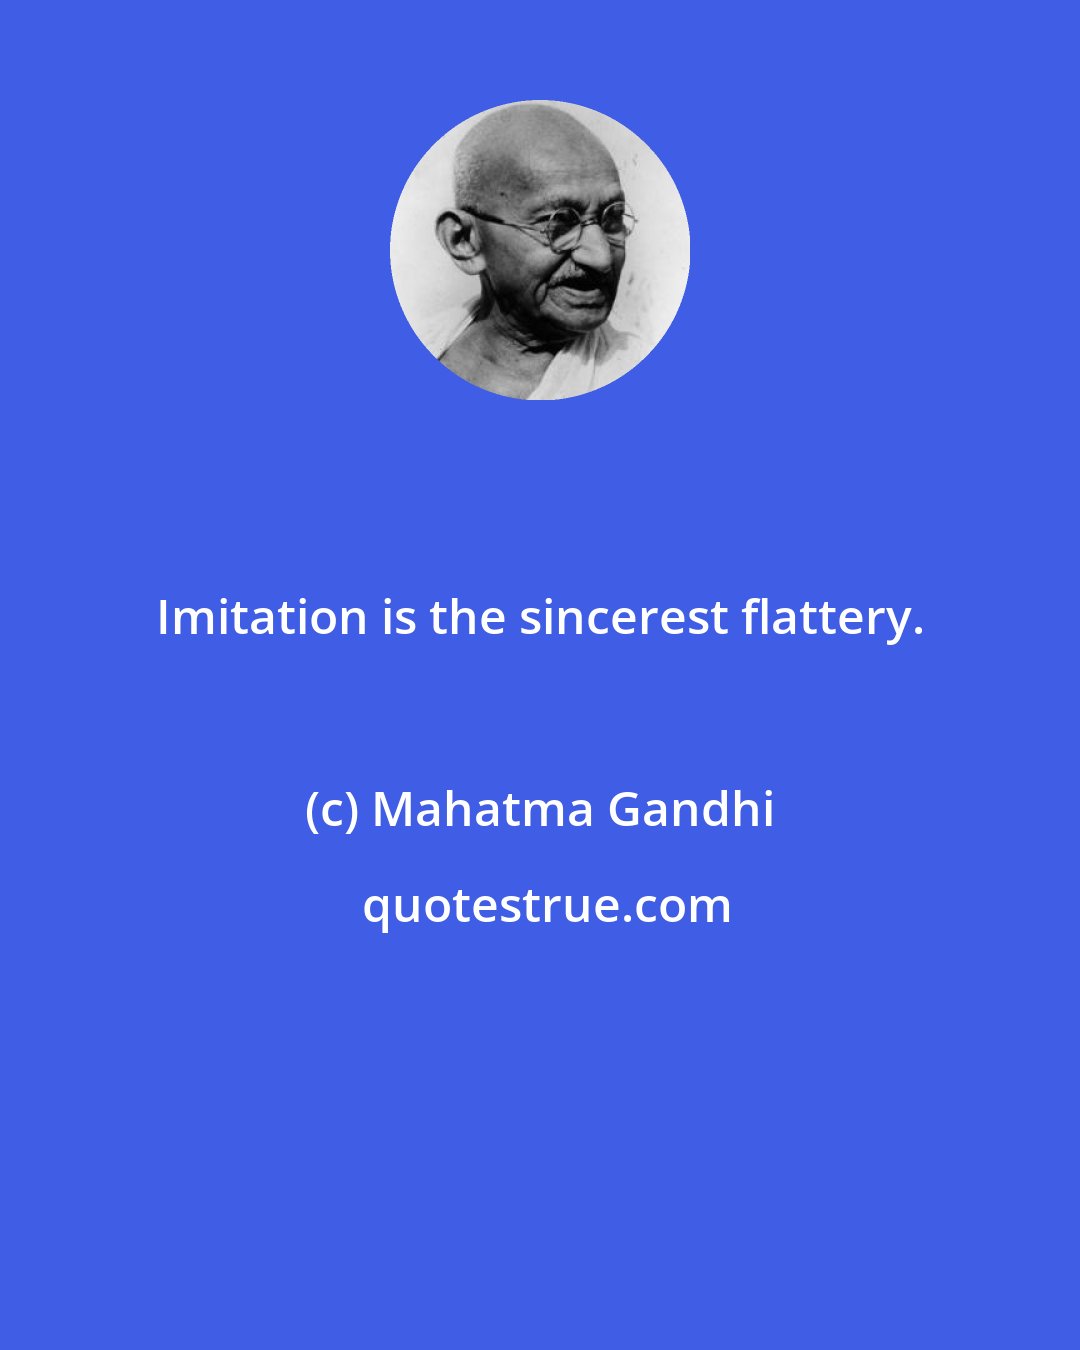 Mahatma Gandhi: Imitation is the sincerest flattery.